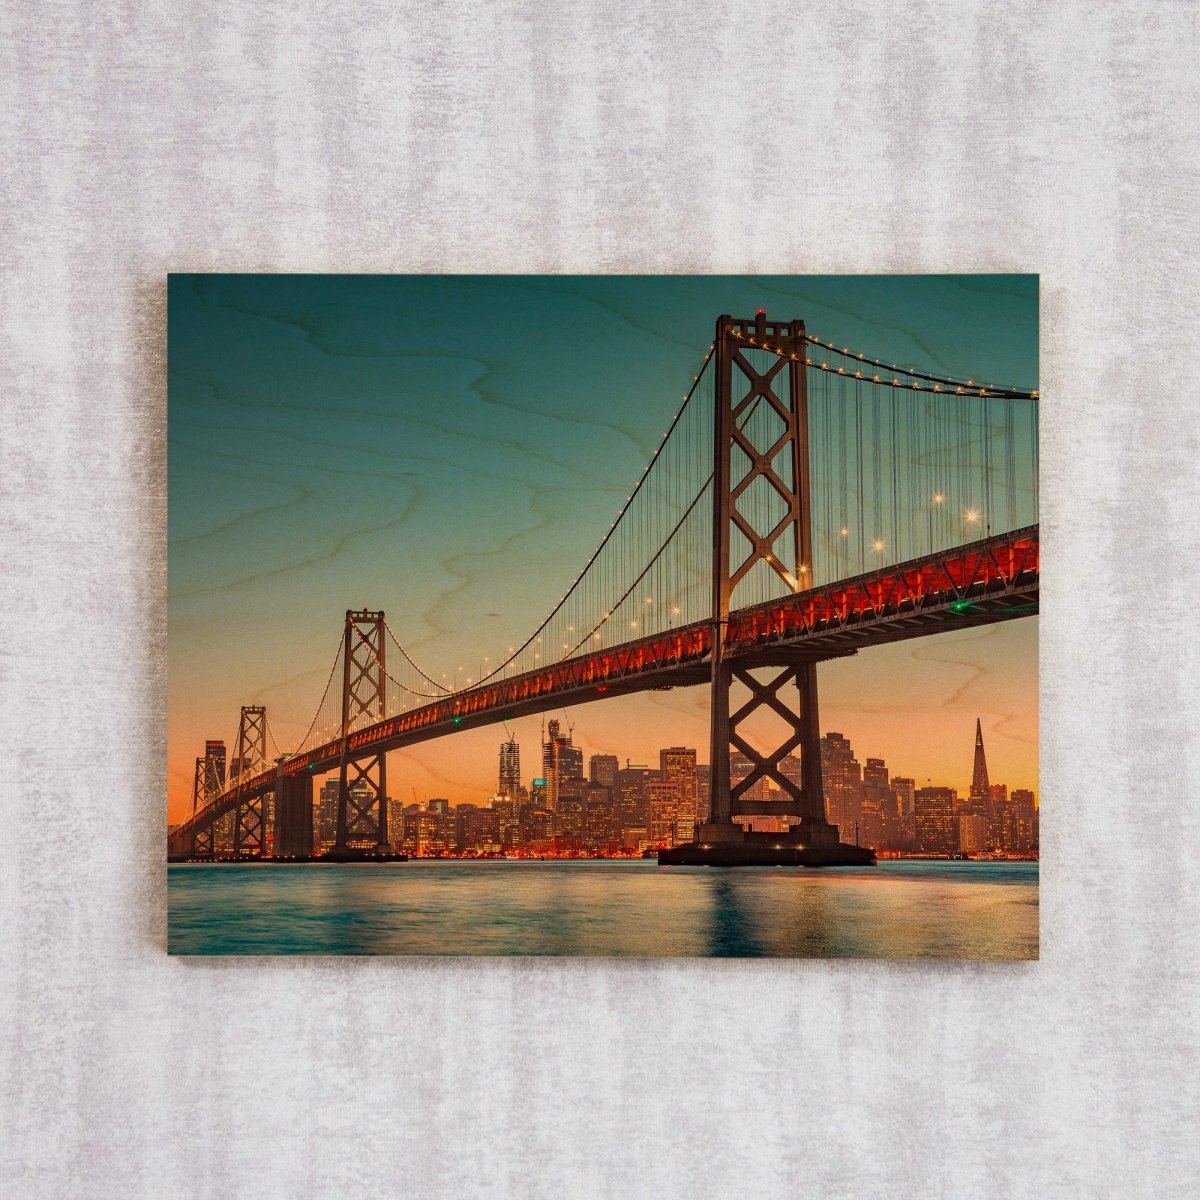 GOLDEN GATE BRIDGE - SAN FRANCISCO, USA - cmzart